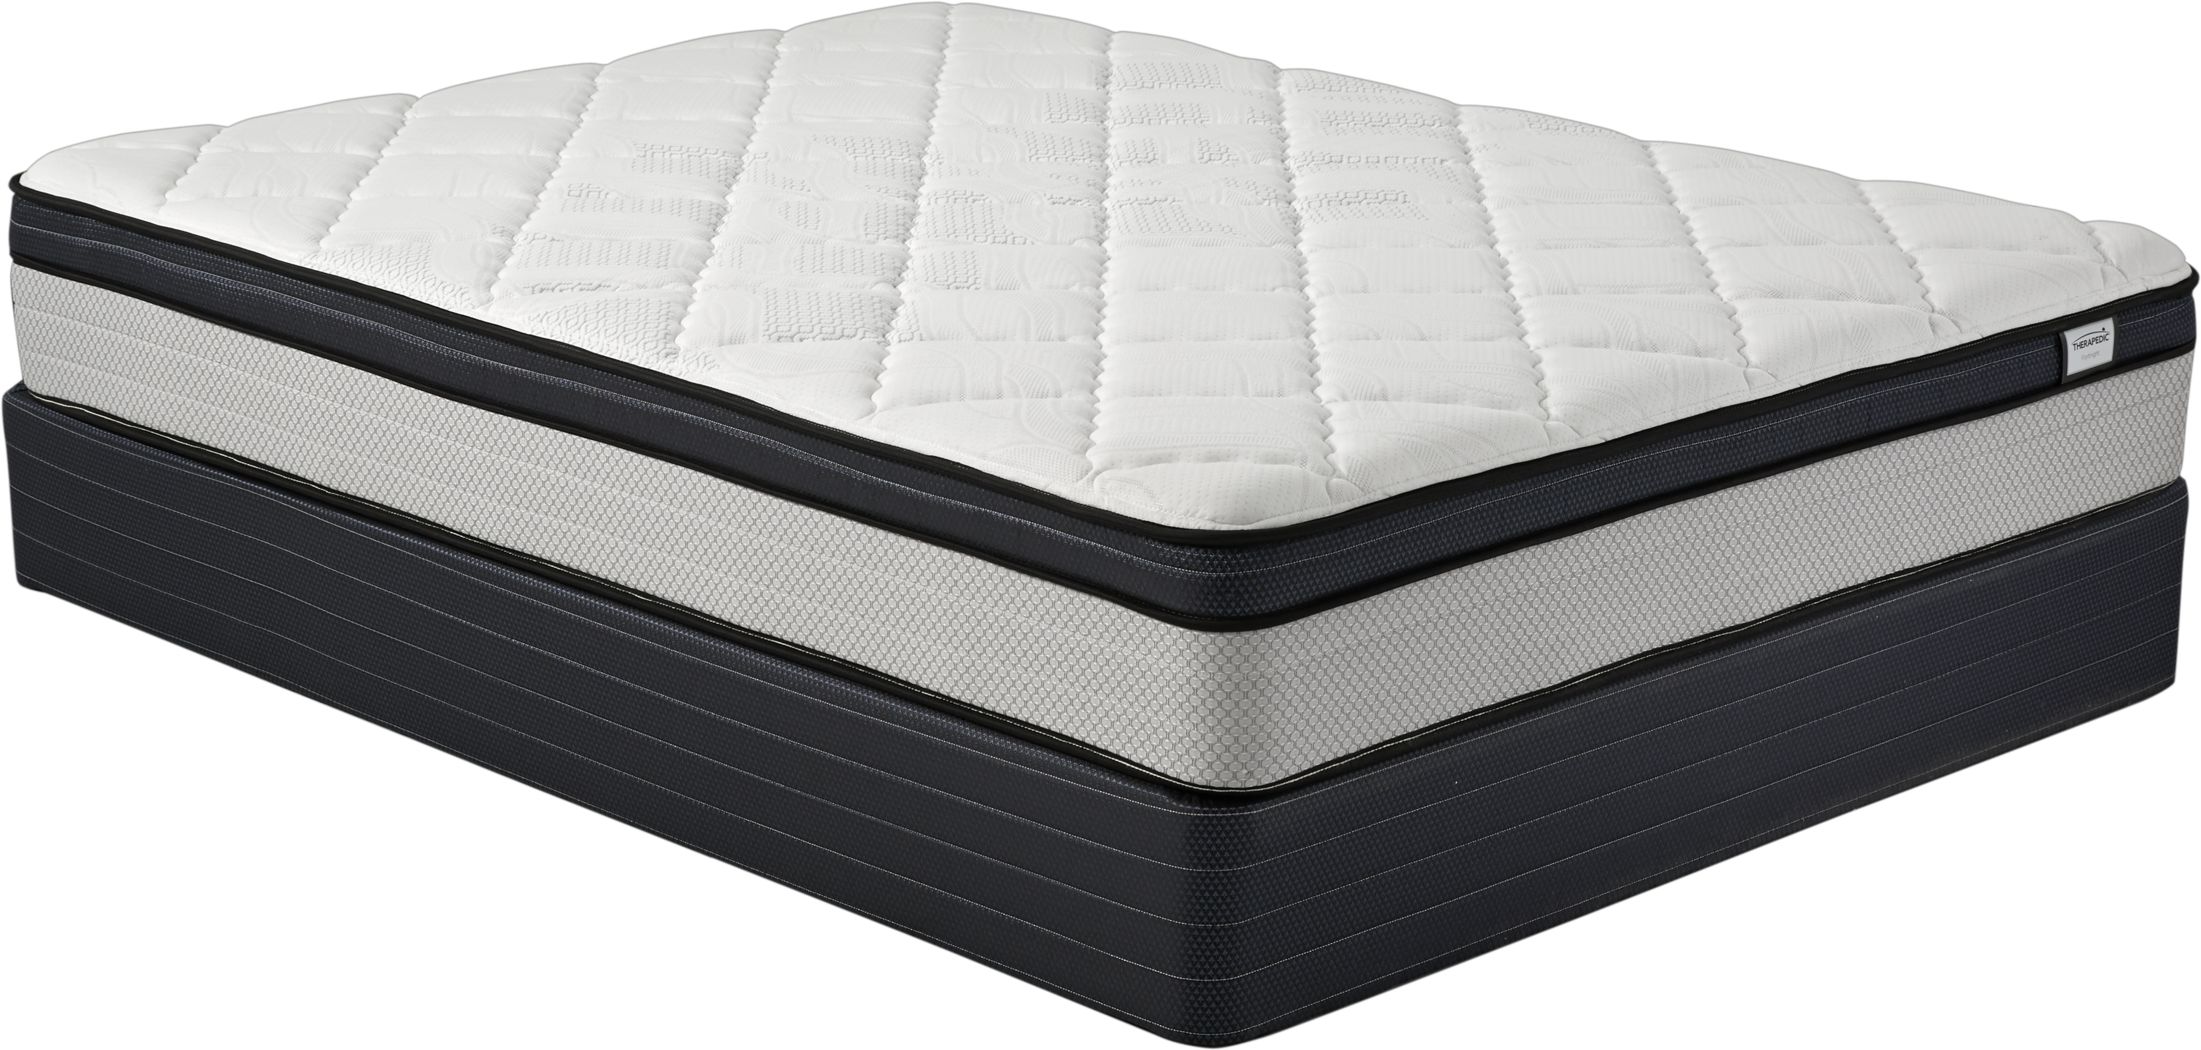 therapedic chesire low profile queen mattress set